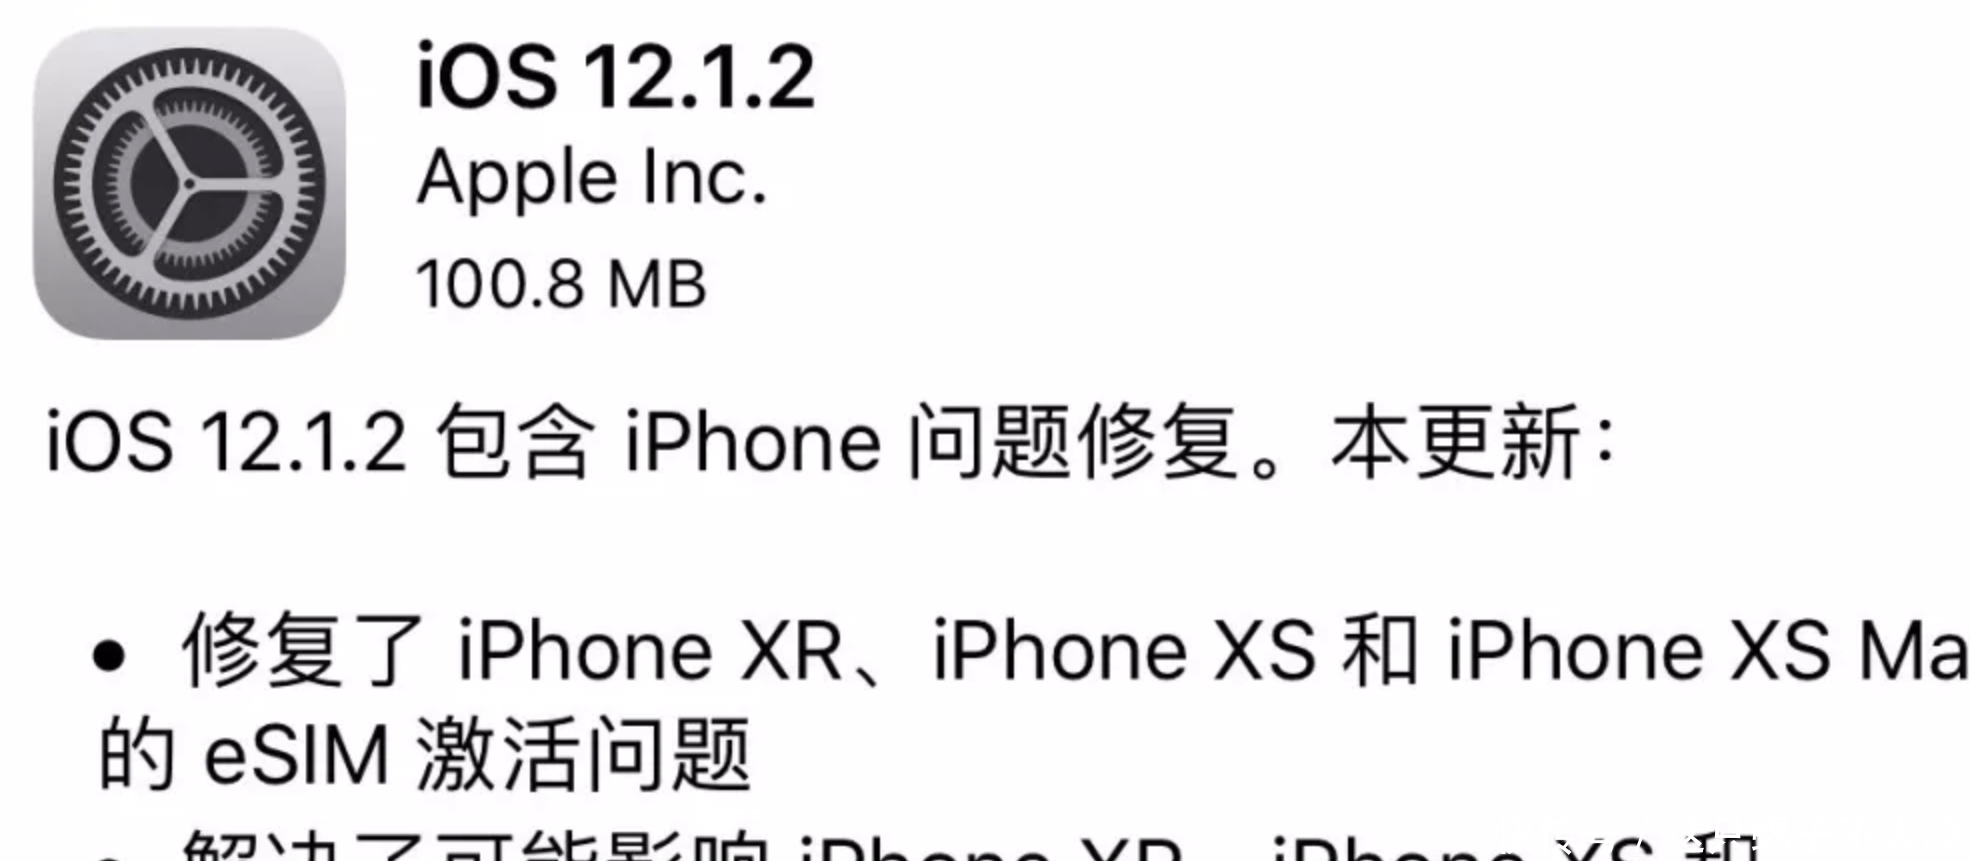 iOS12.1.2 信号差还断网?iPhone XR手机降价